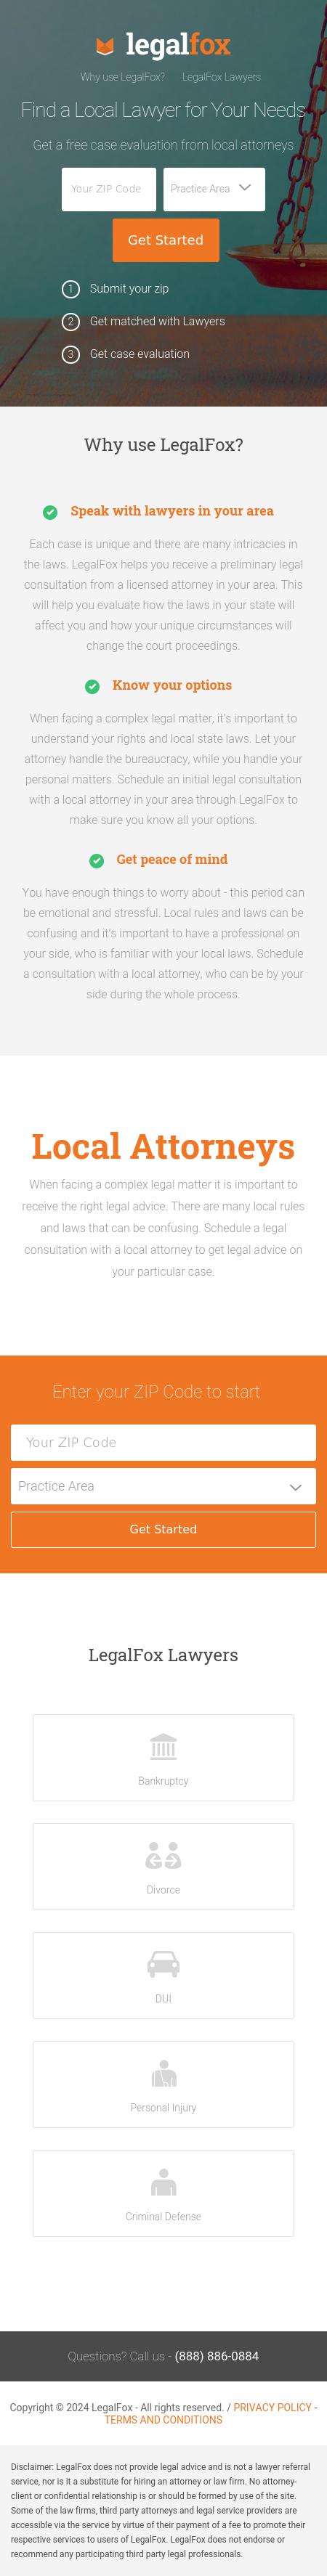 Find a Local Attorney - El Paso TX Lawyers